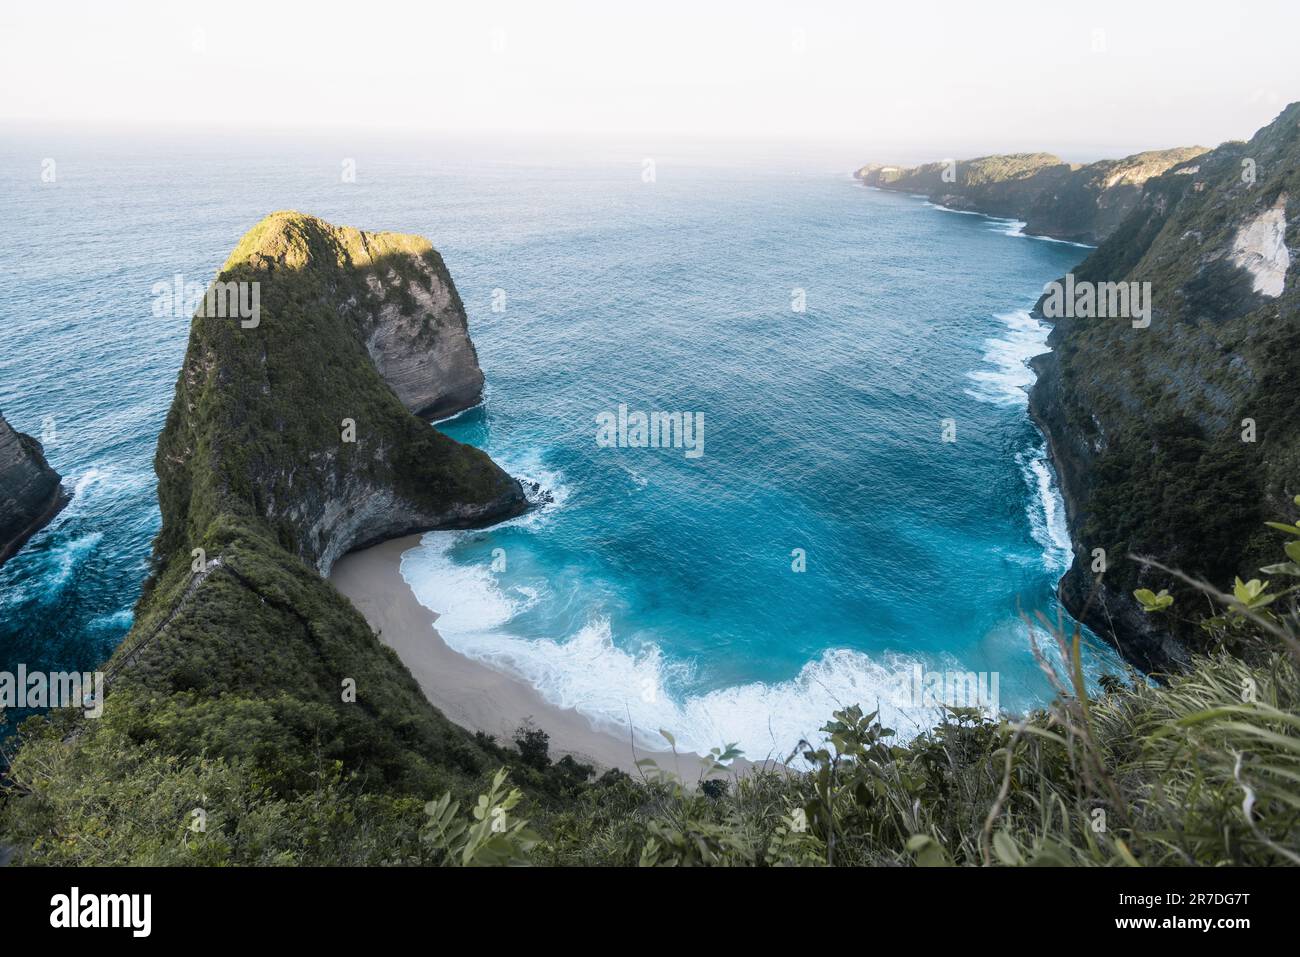 A Beautiful View of Kelingking Beach at Nusa Penida, Bali Indonesia Stock Photo